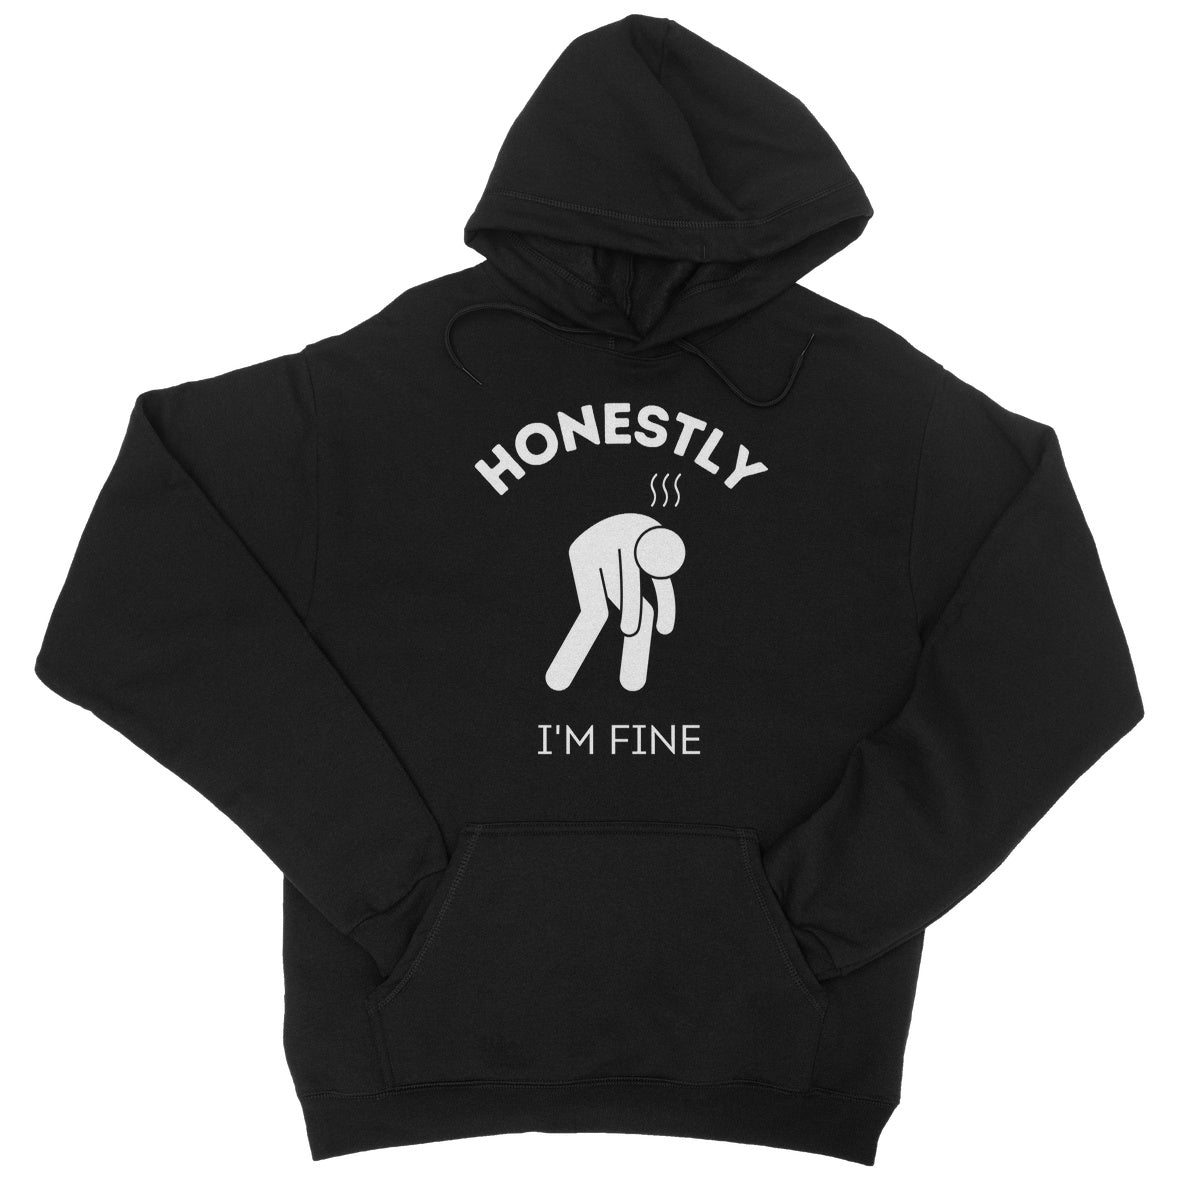 honestly I'm fine hoodie black